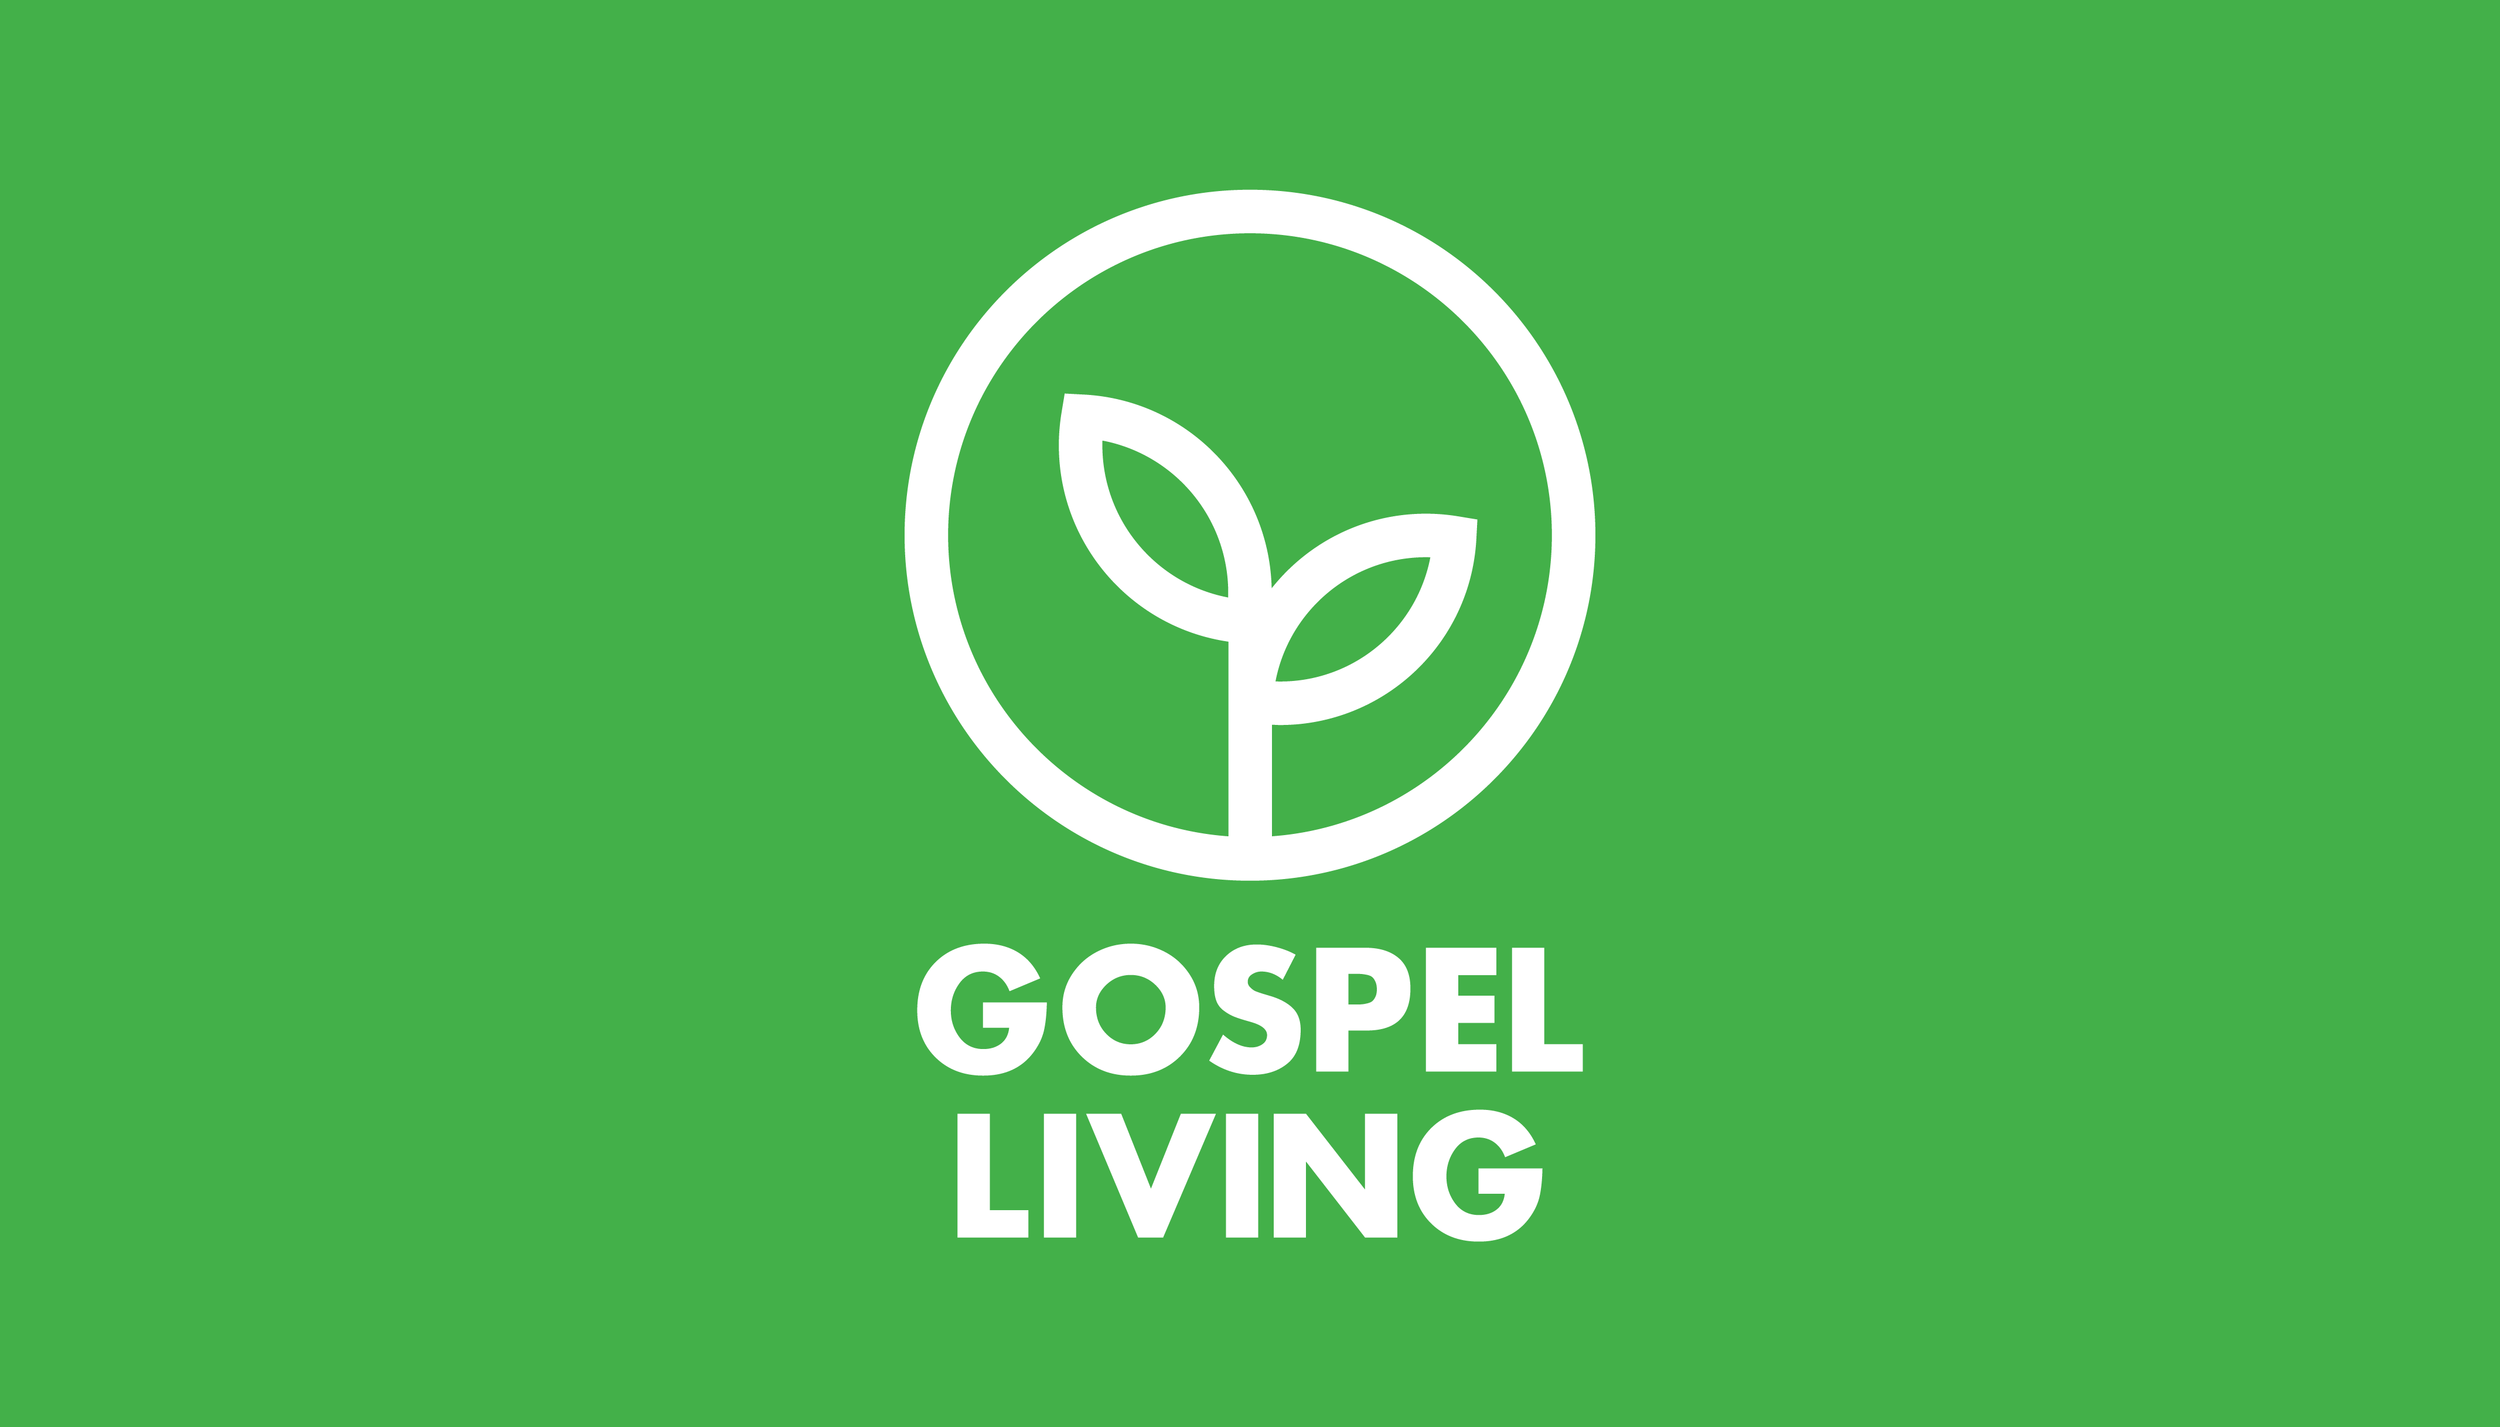 Gospel Living - Header.png